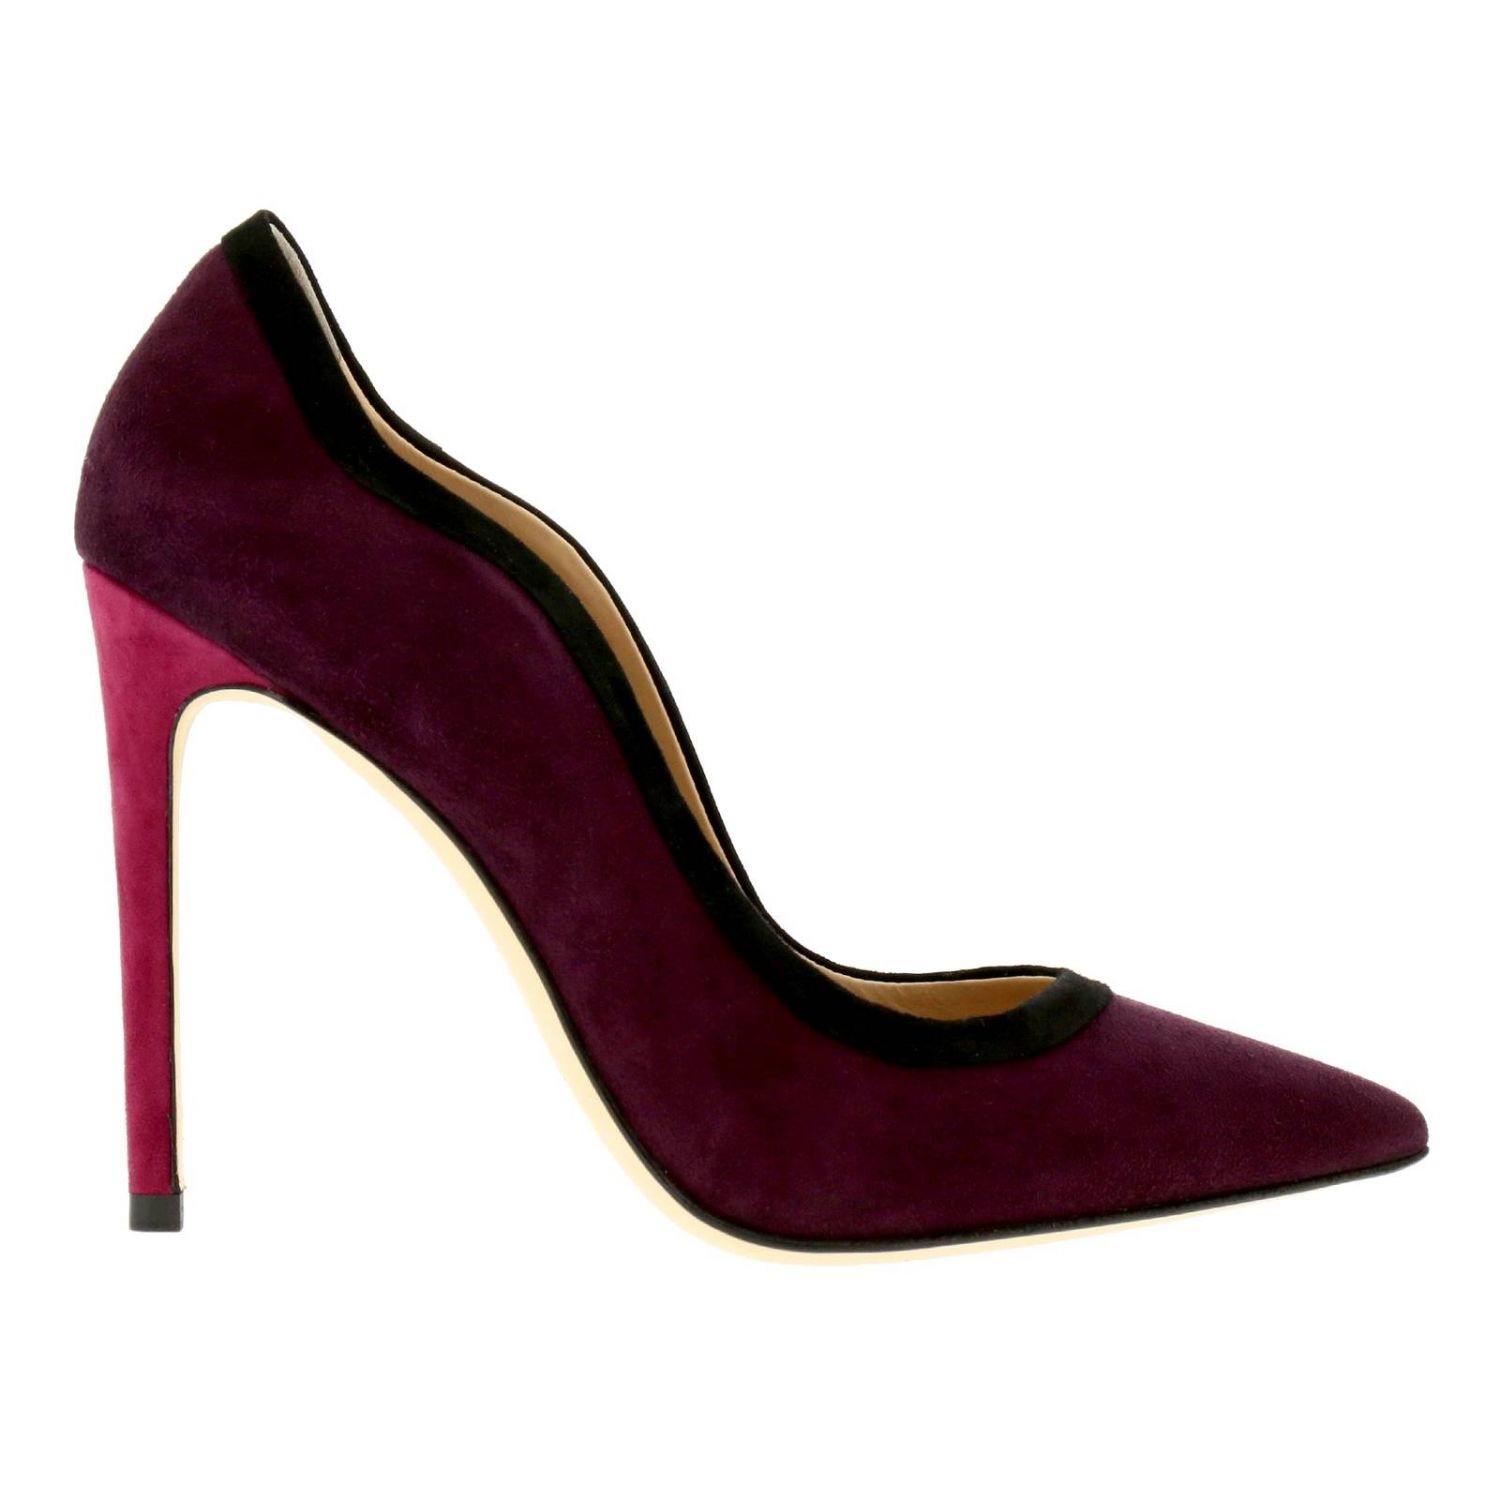 Benedetta Boroli Outlet: Shoes women - Violet | Pumps Benedetta Boroli ...